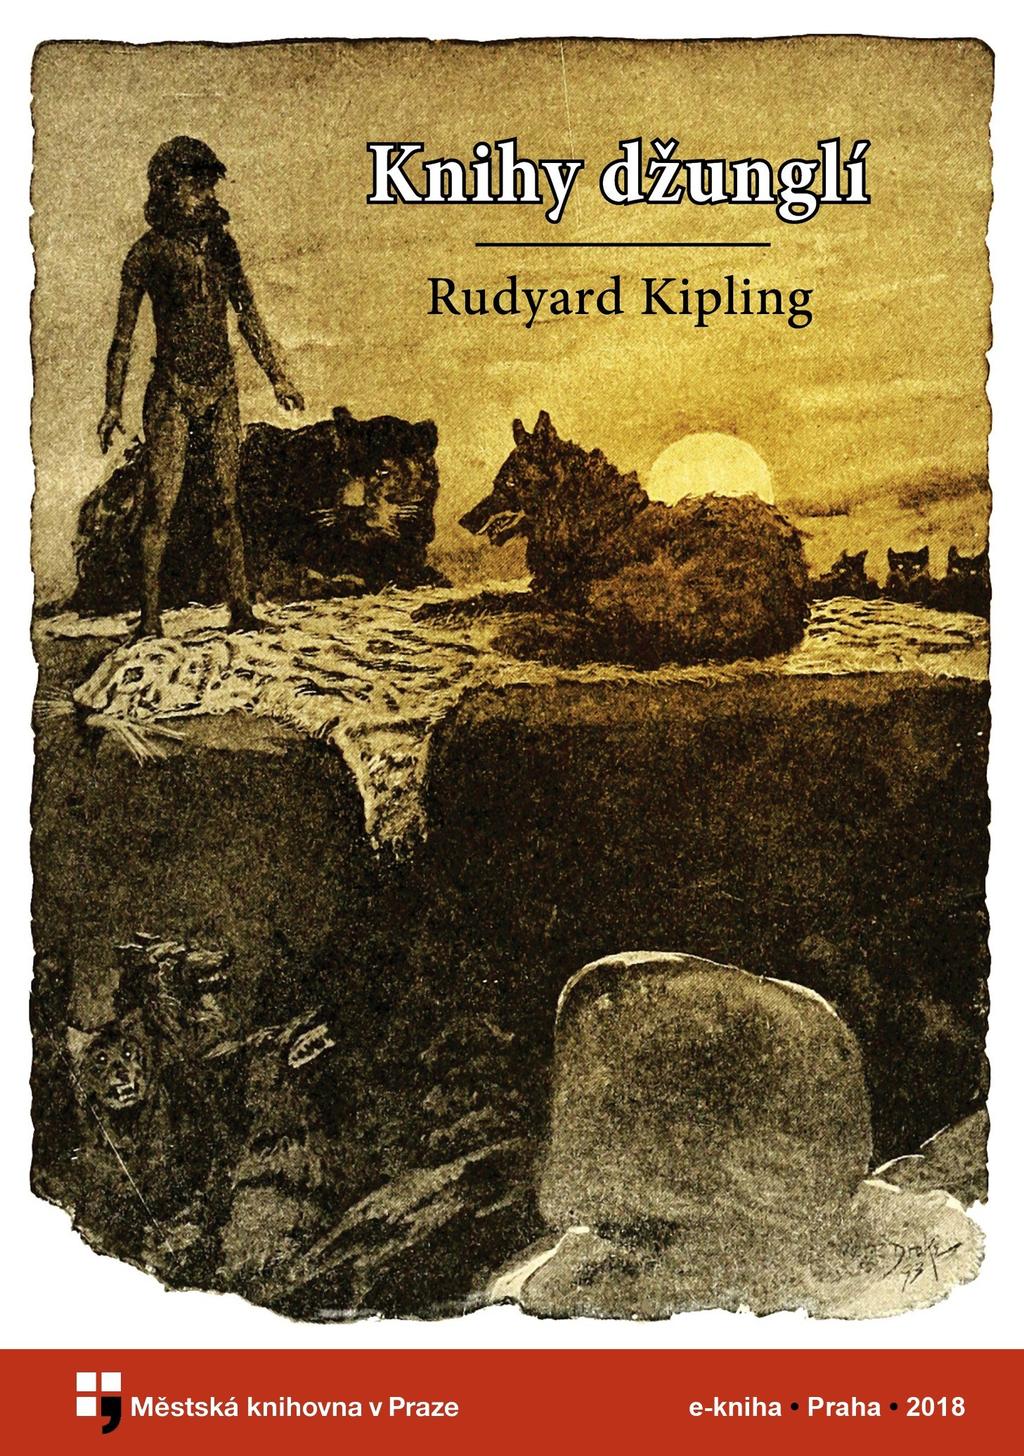 Knihy džunglí. Rudyard Kipling. Přeložili Aloys a Hana Skoumalovi - PDF  Free Download